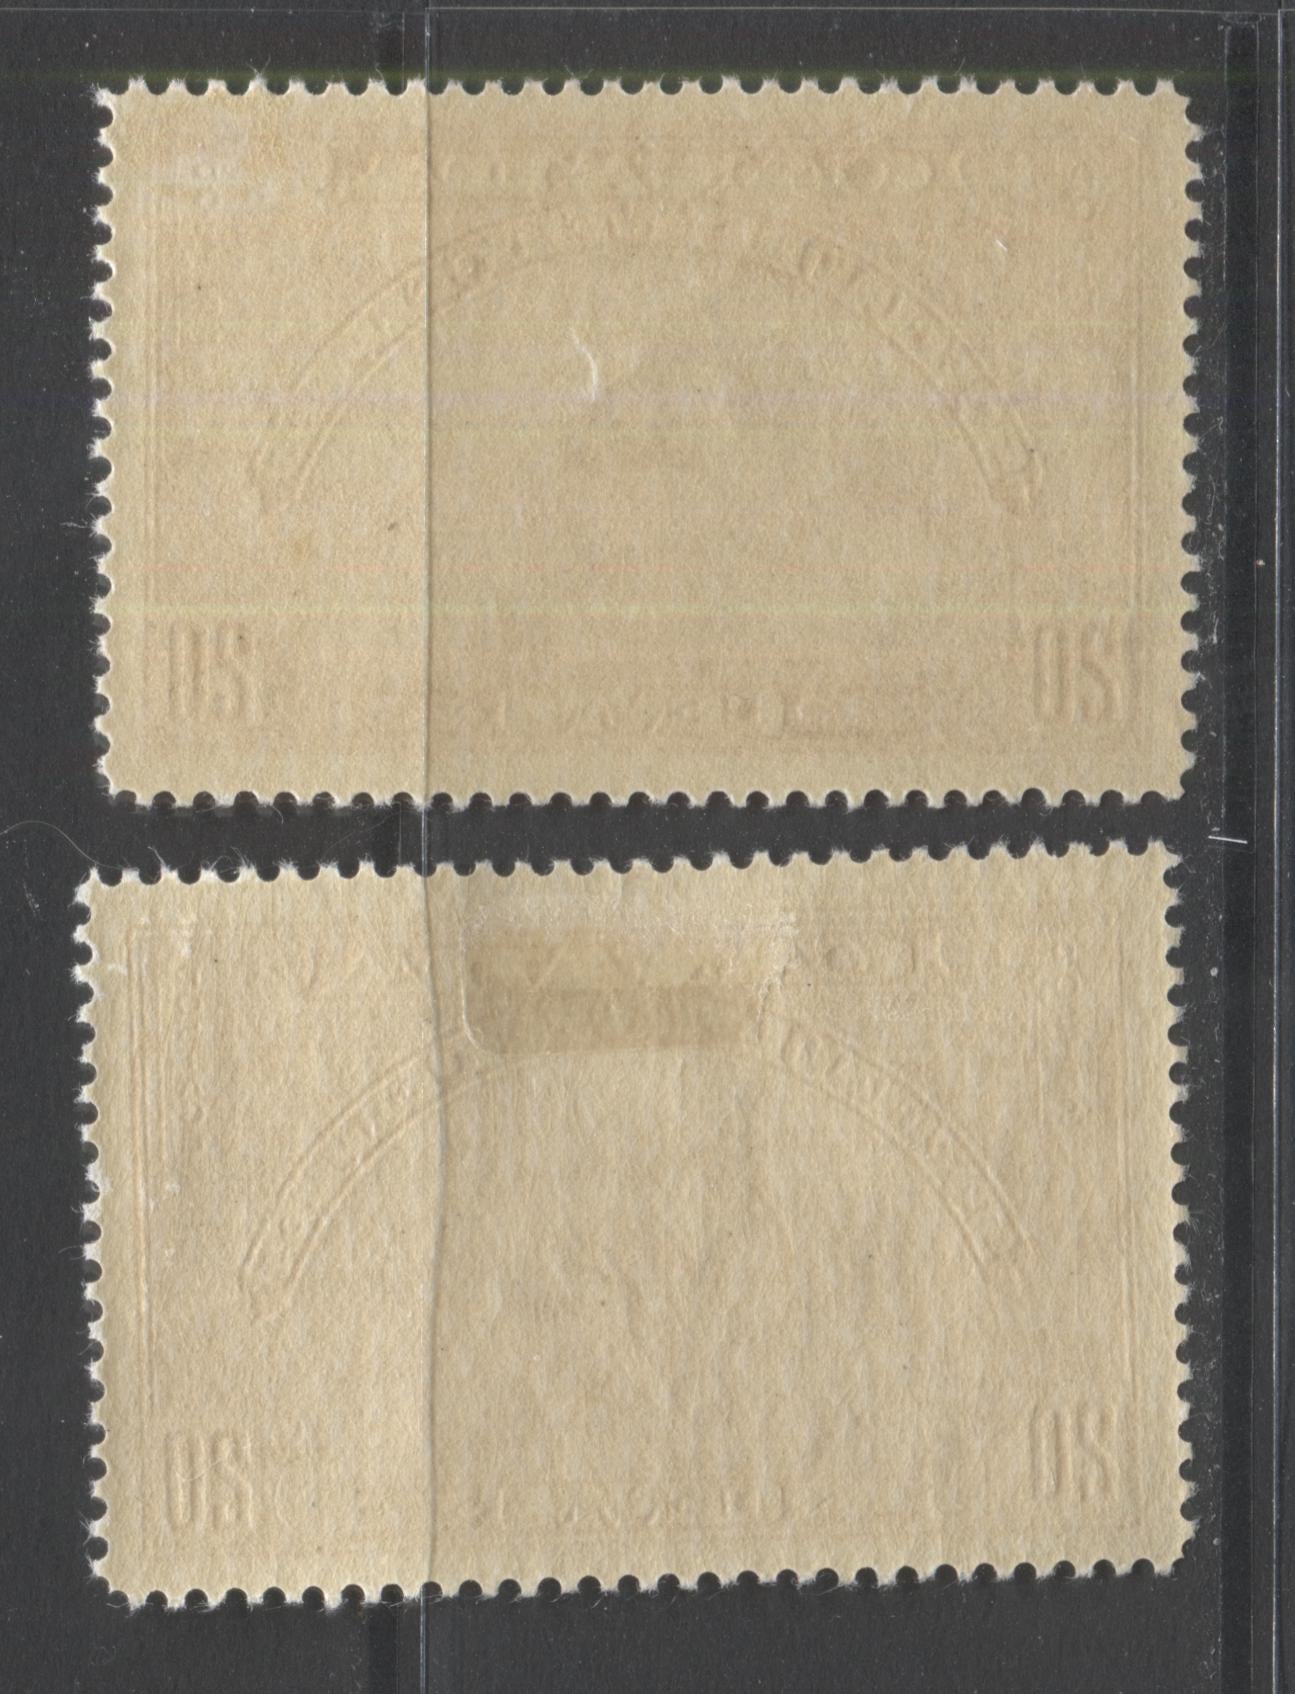 Lot 49 Canada #E6 20c Dark Carmine Marcury, 1935-1937 Dated Die Issue, 2 VFOG Singles, 2 Shades With Light Cream Gum